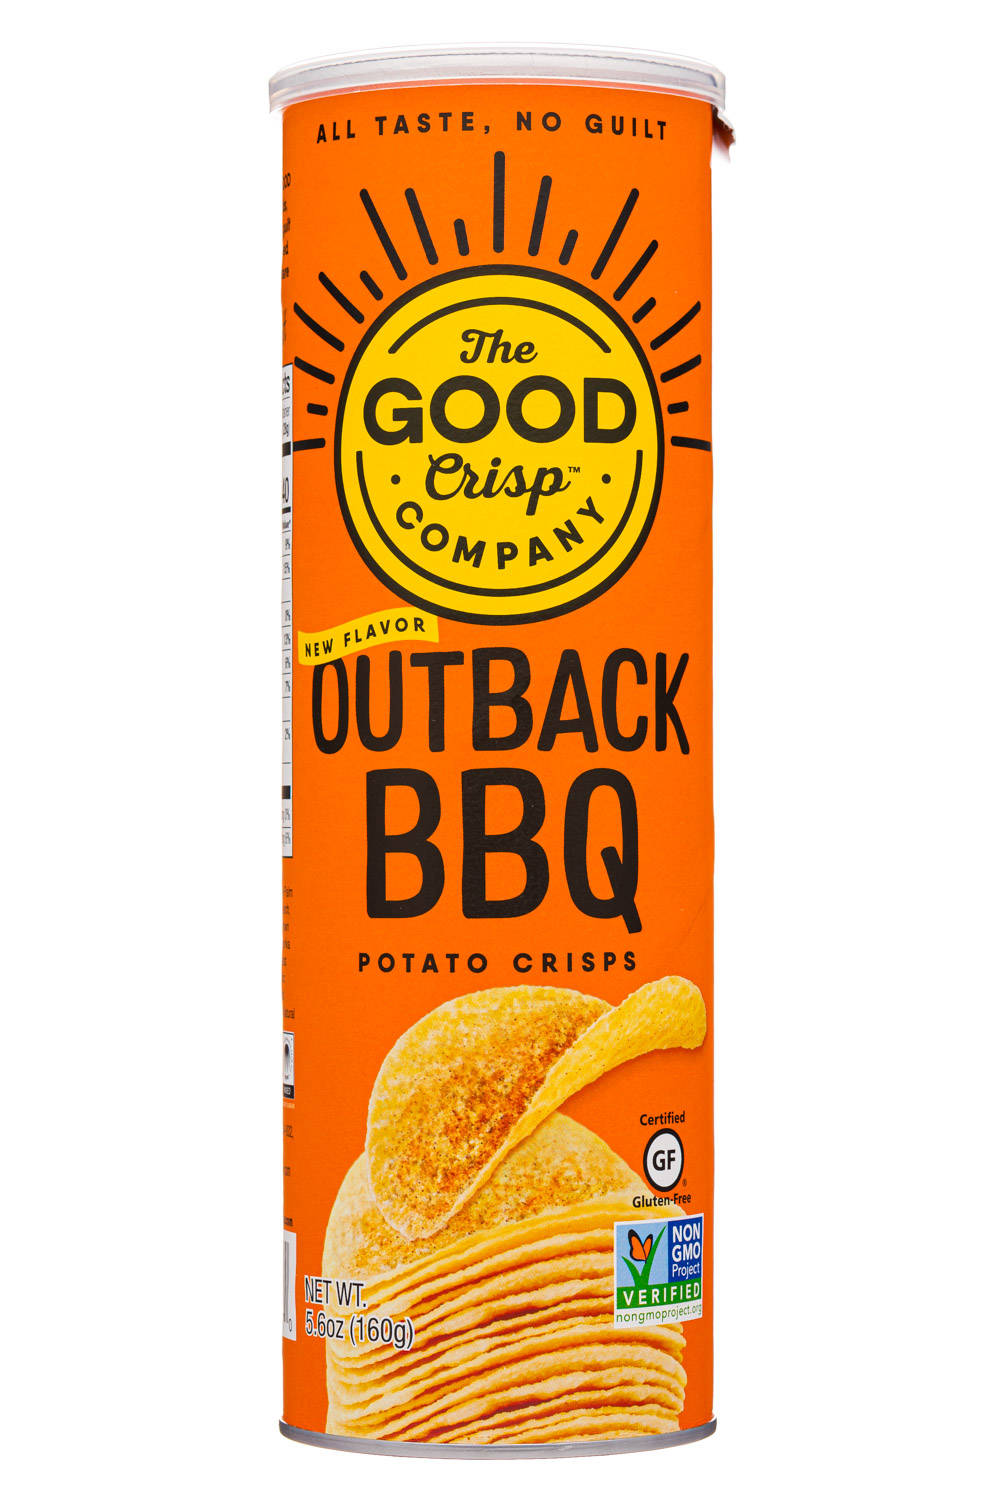 Outback BBQ 5.6oz (2020)